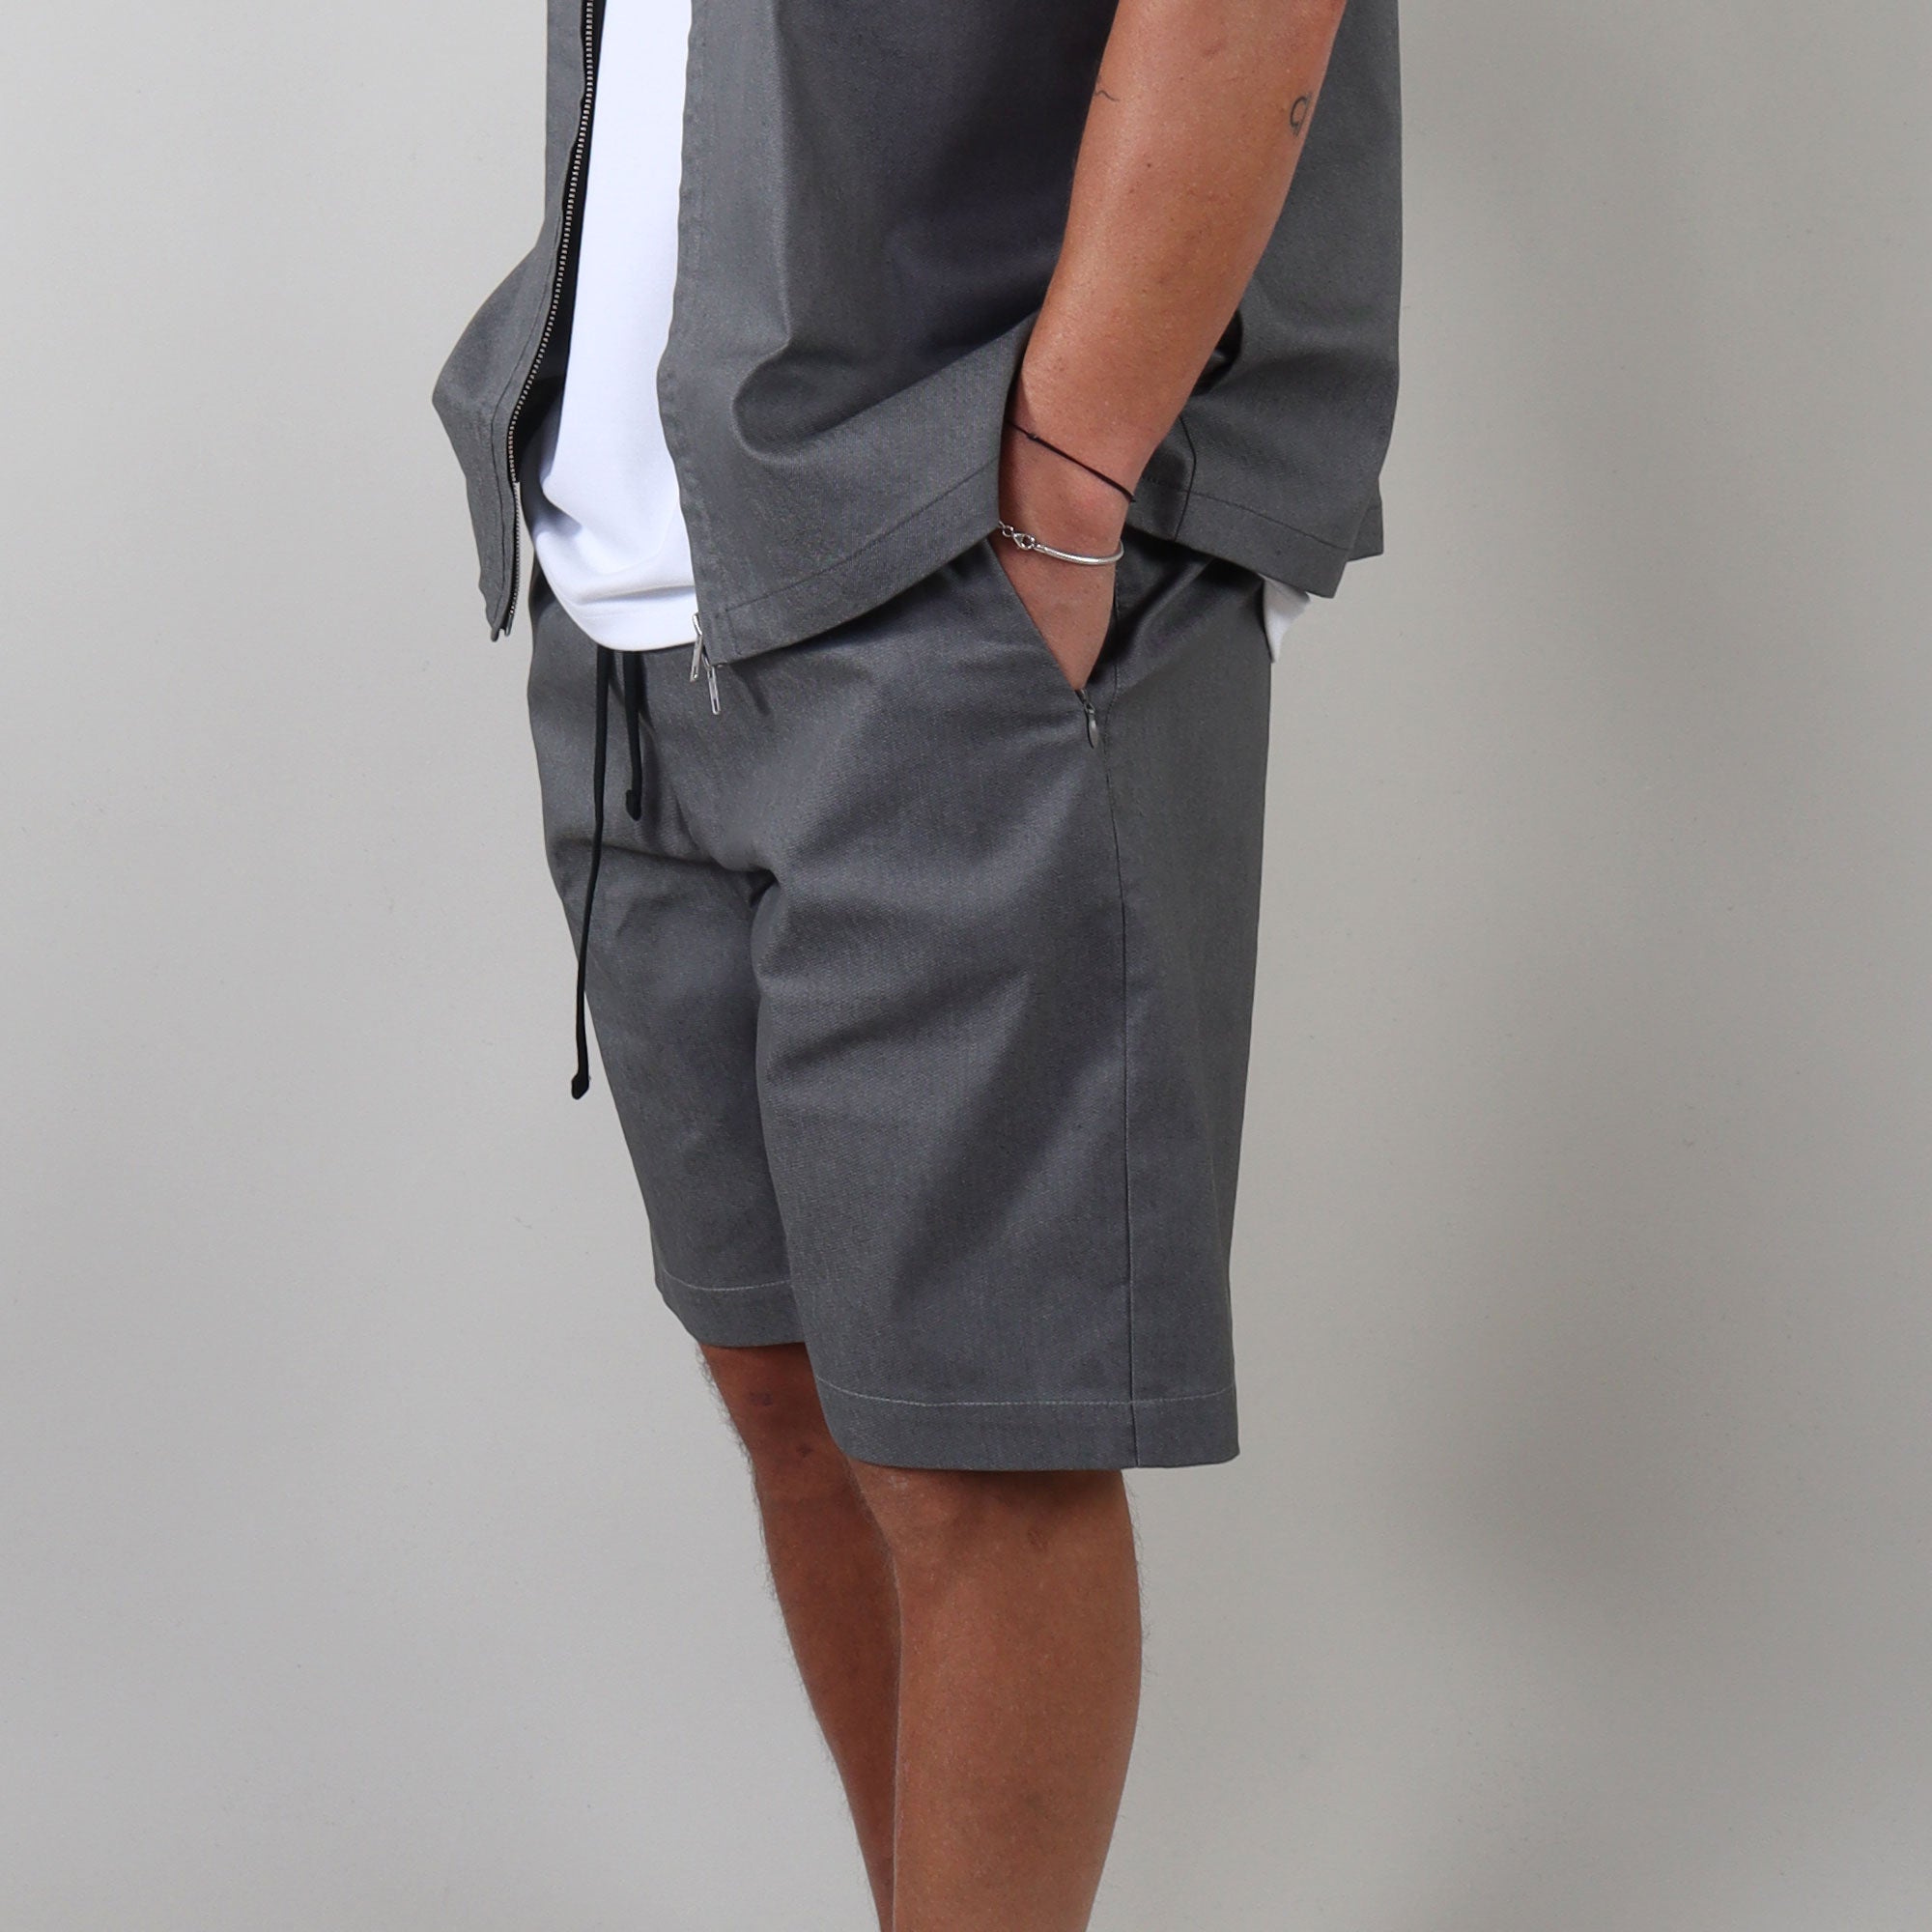 PRJCT light cotton denim shorts grey